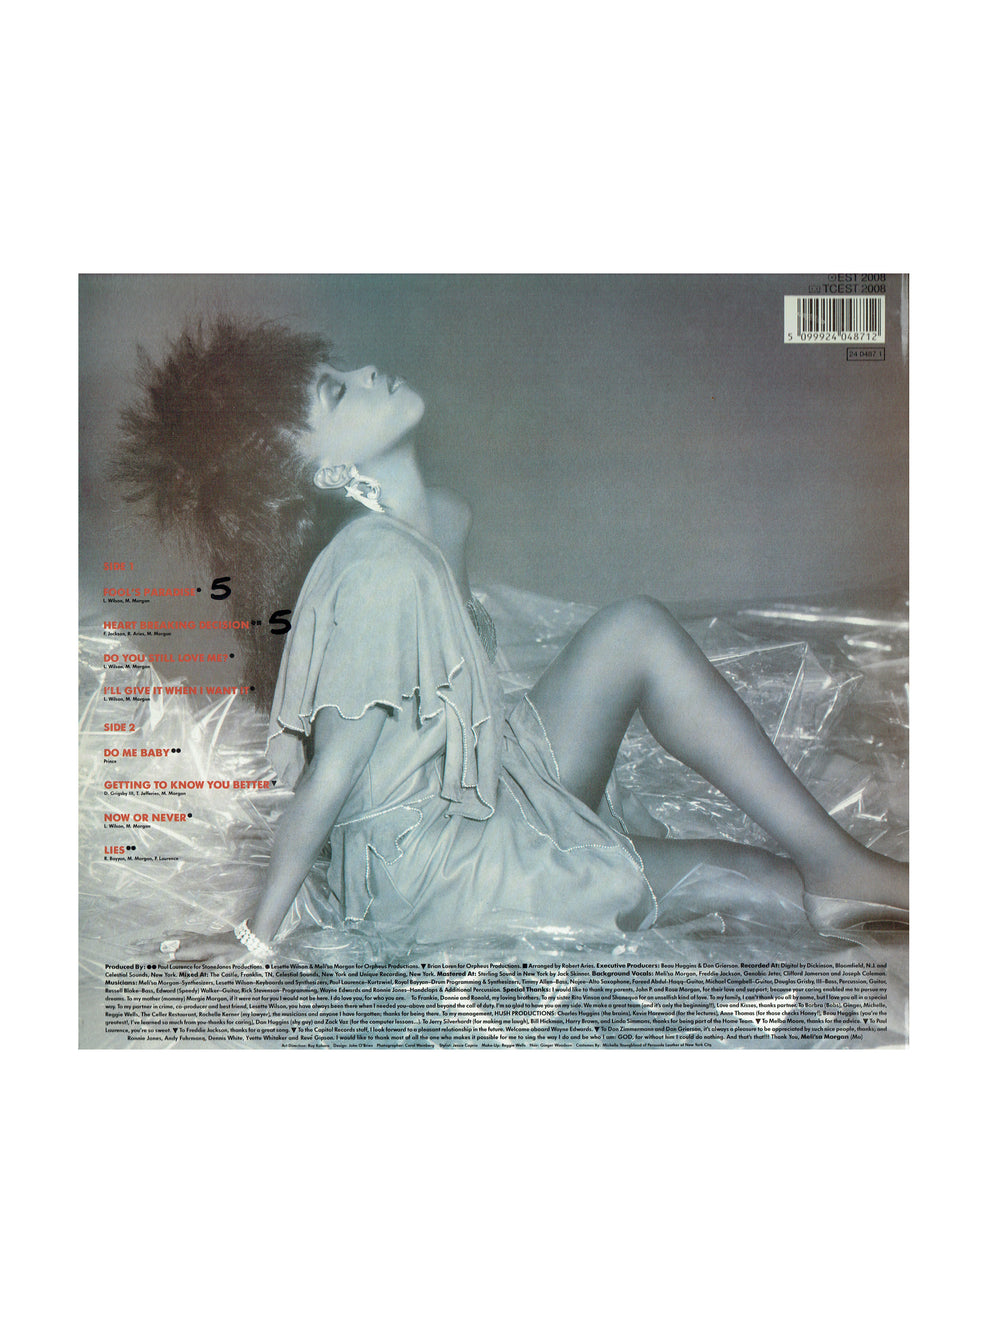 Melisa Morgan Do Me Baby Vinyl Album 1986 Original Release Prince SMS